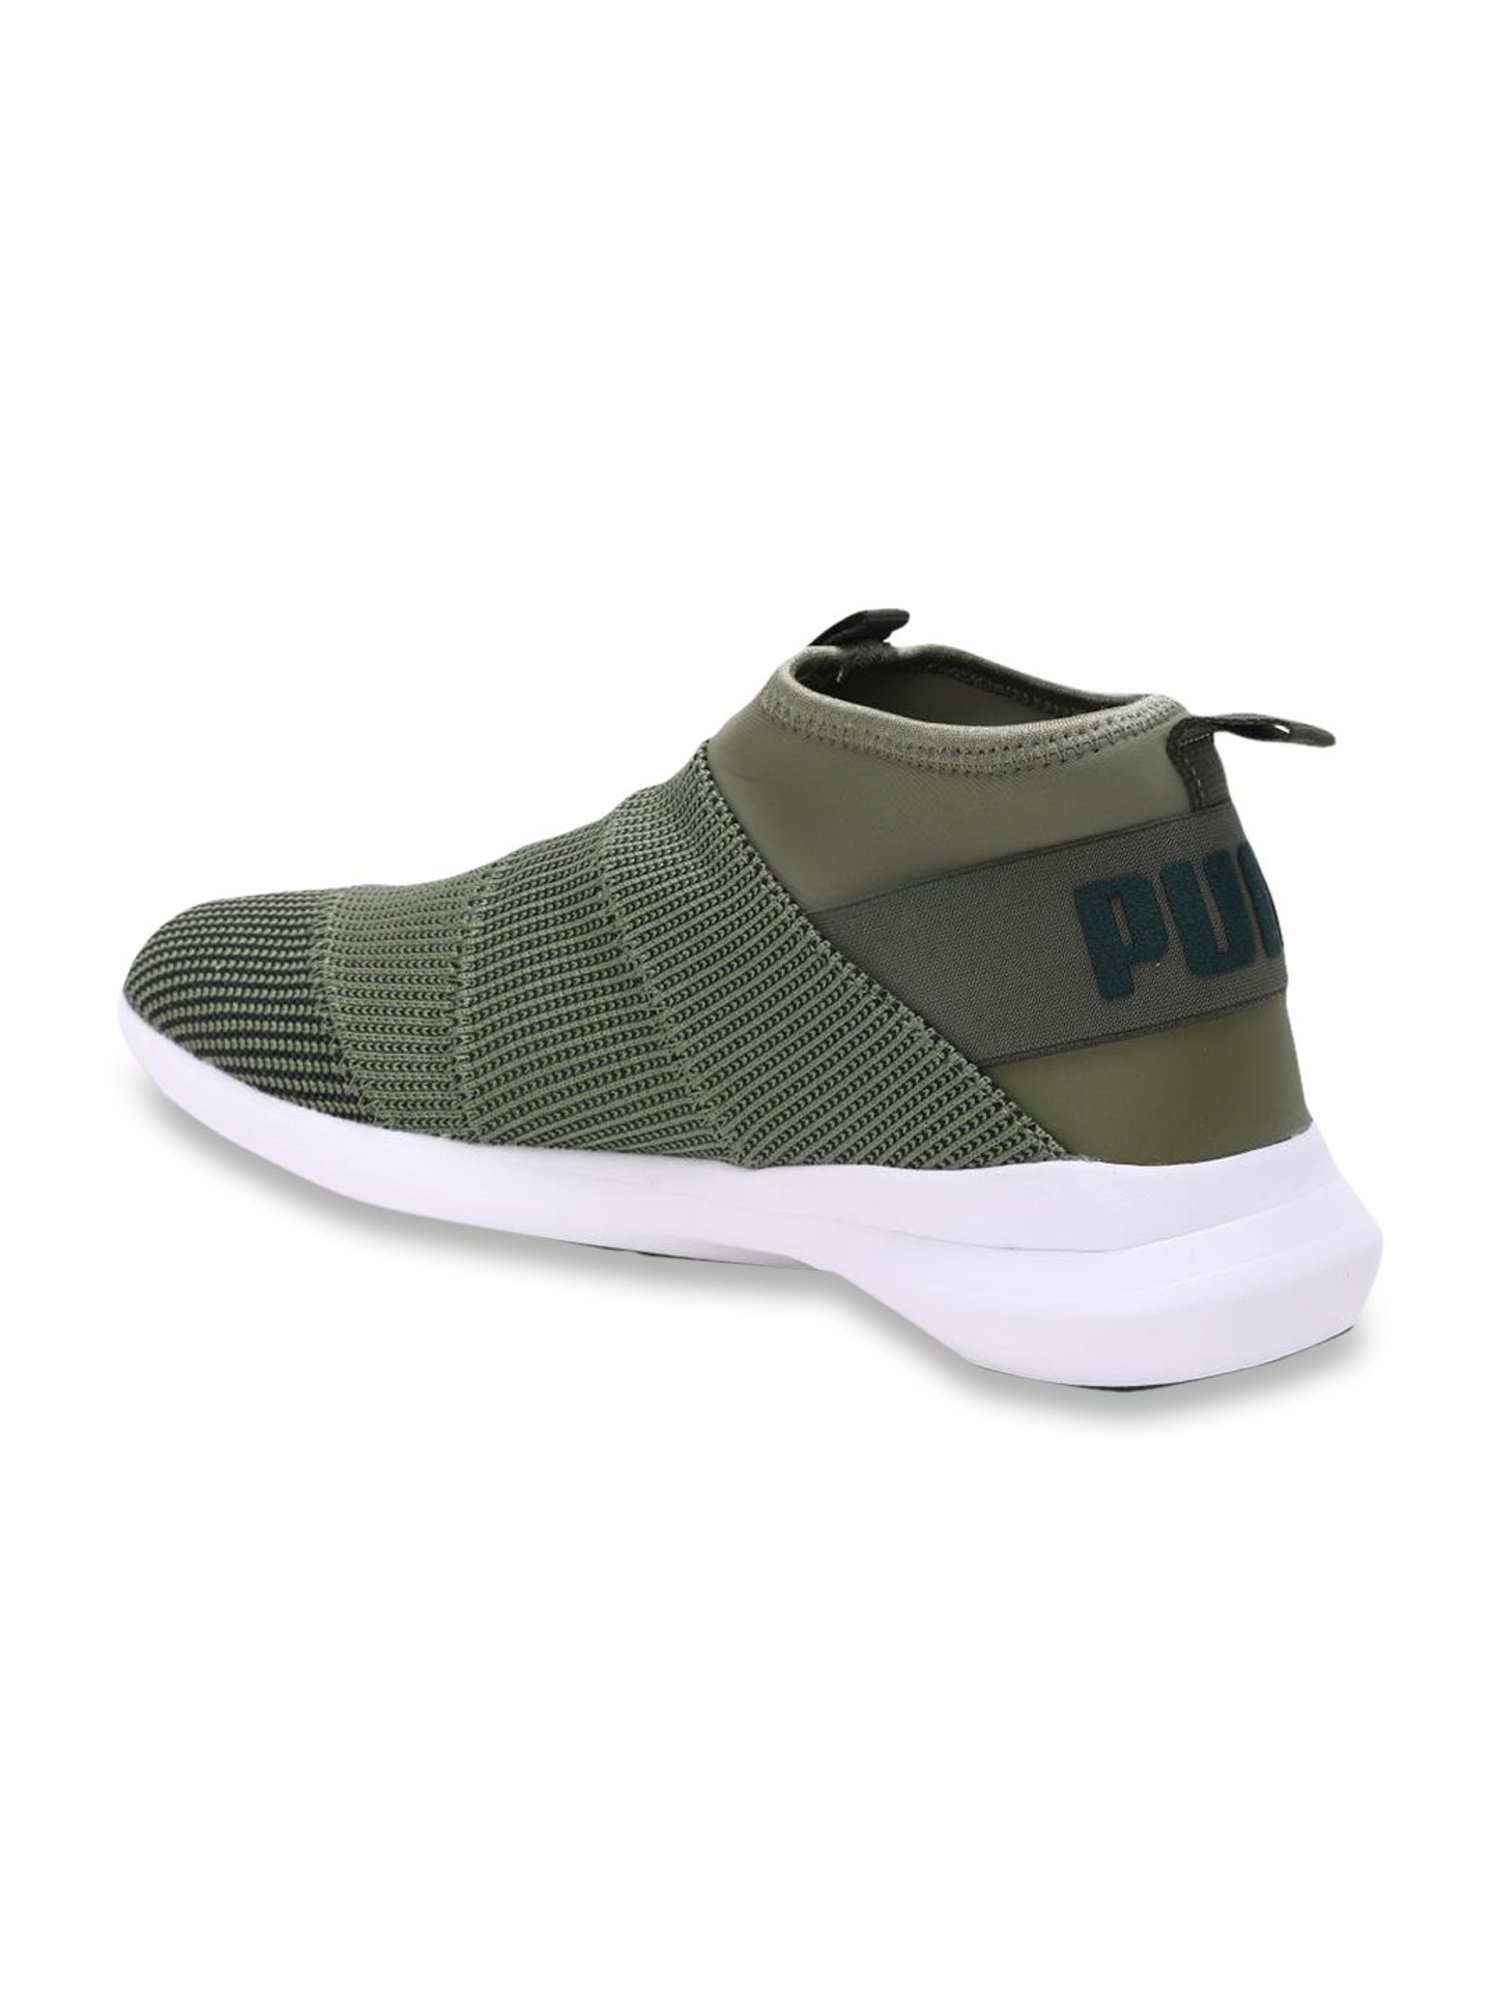 Puma Mono Knit X IDP Olive Ankle High 